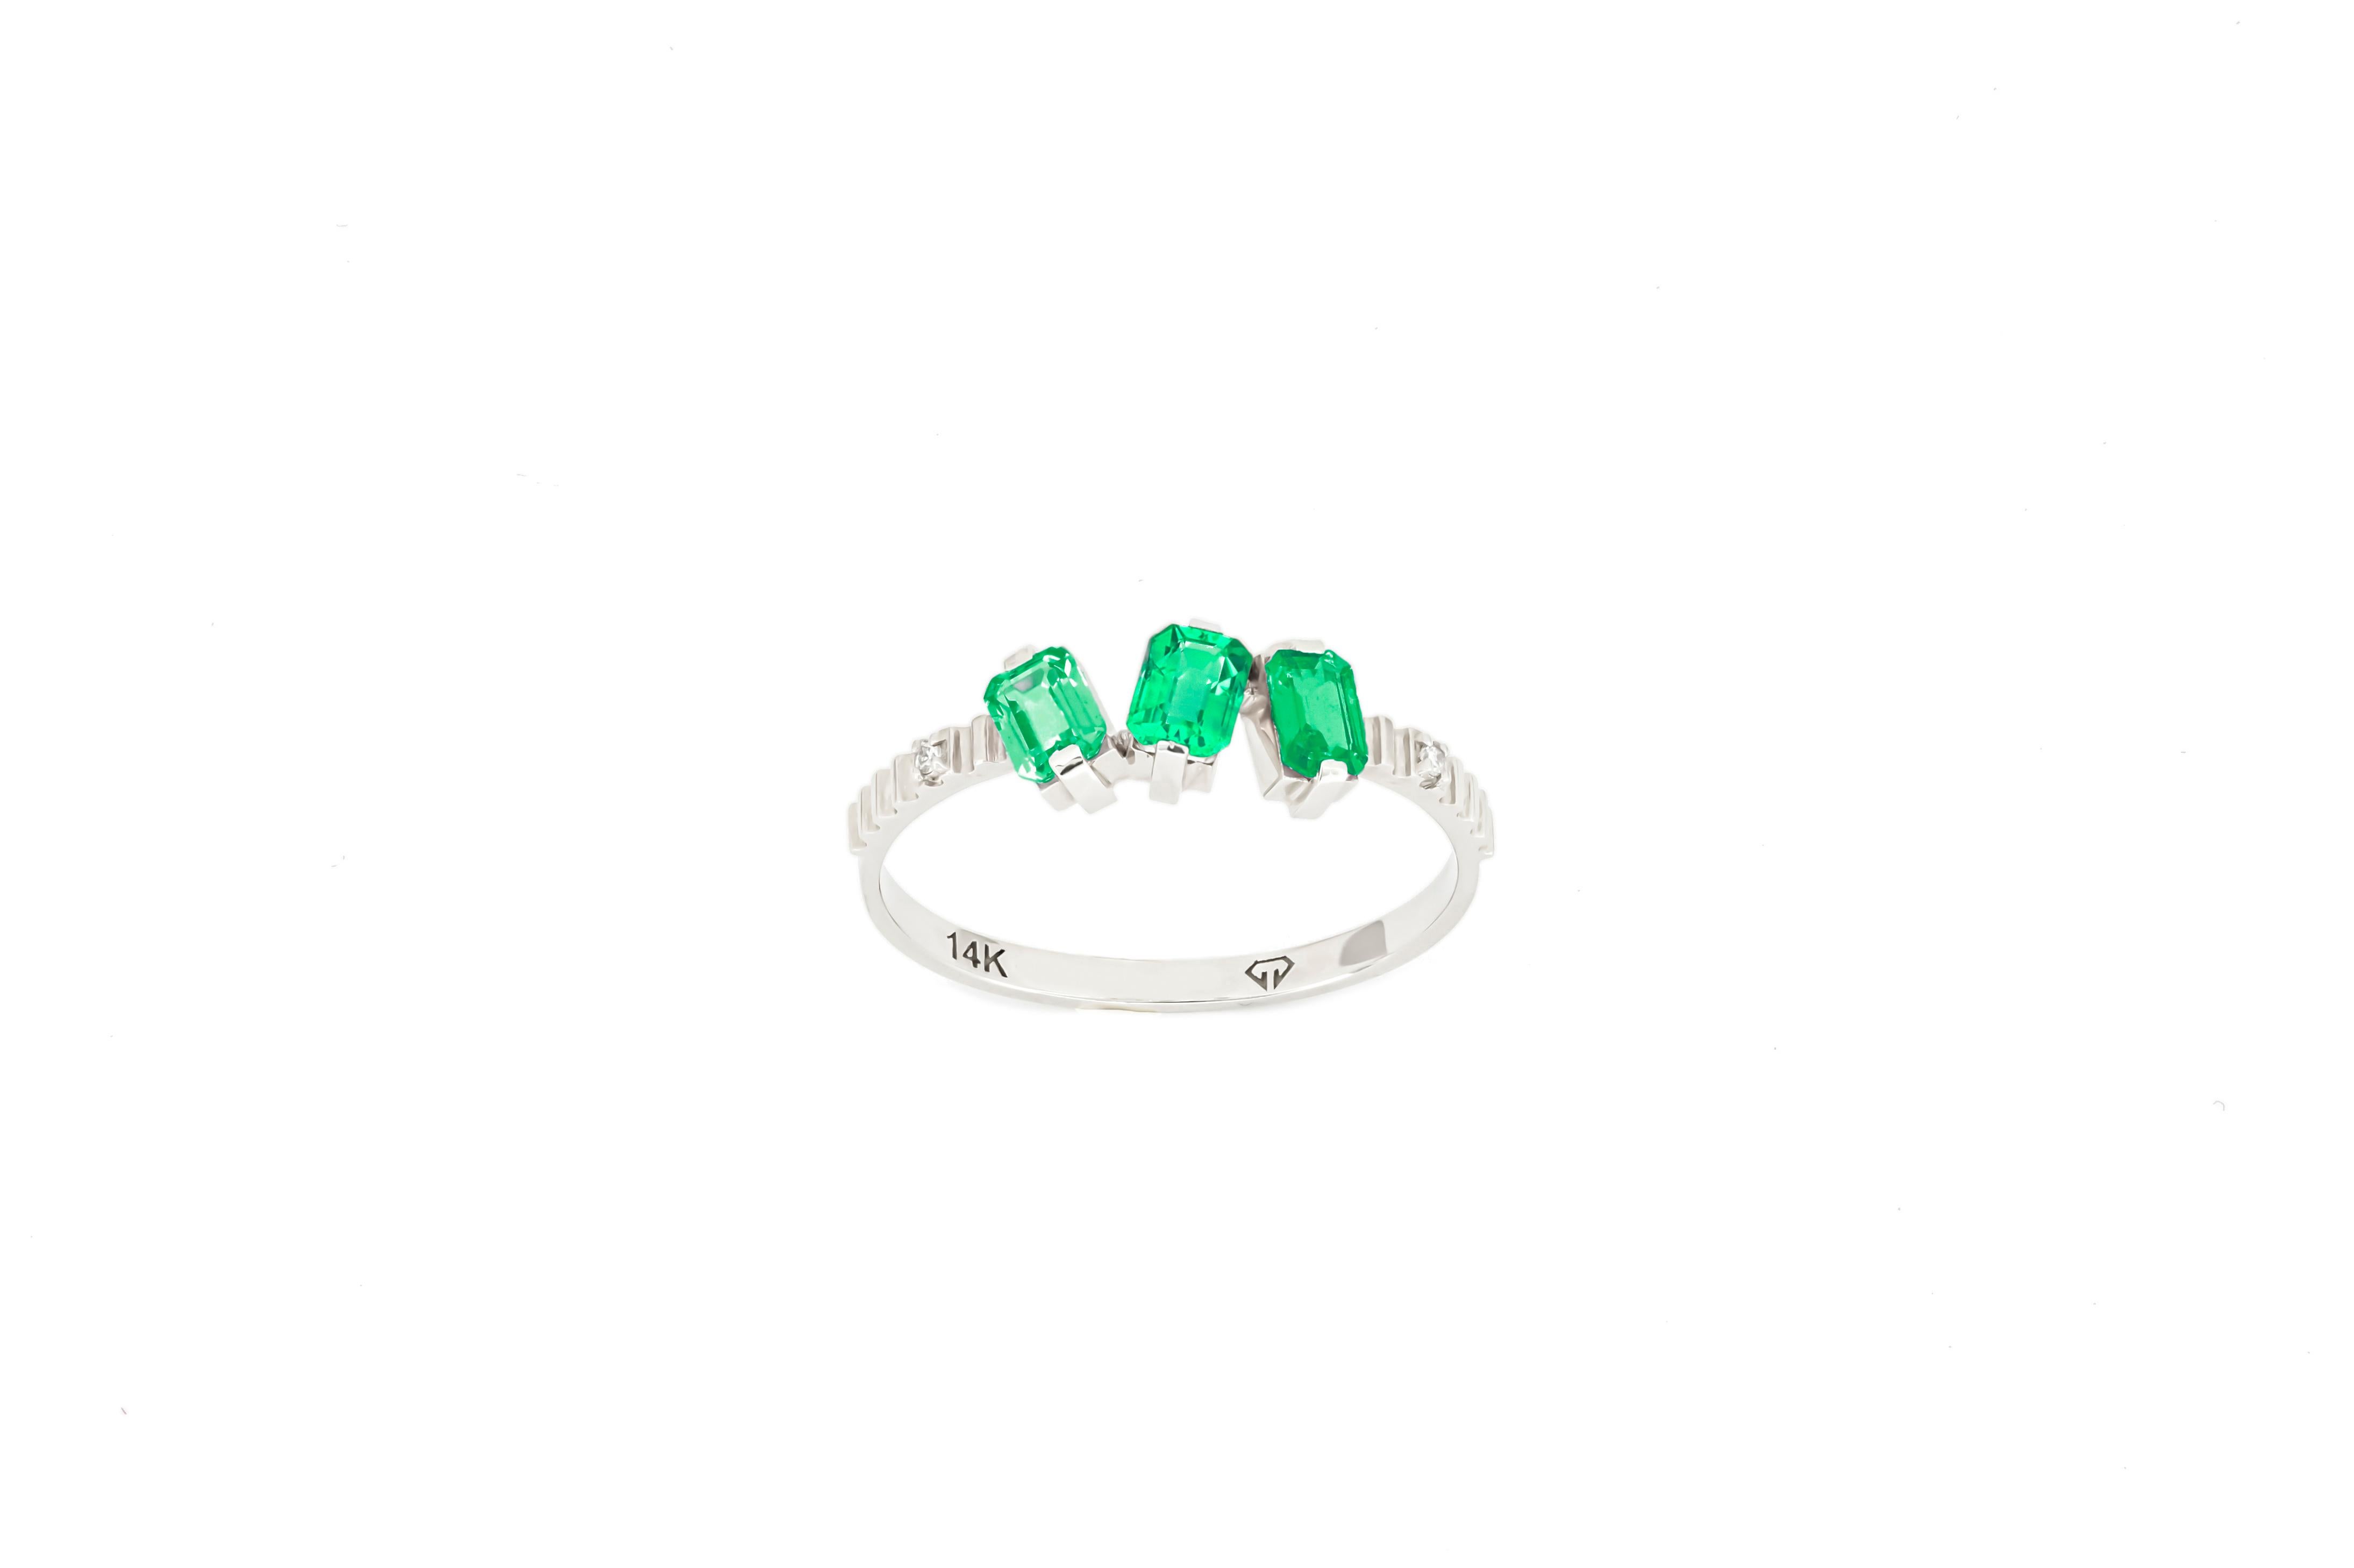 For Sale:  Monochrome green gemstone 14k ring.  5